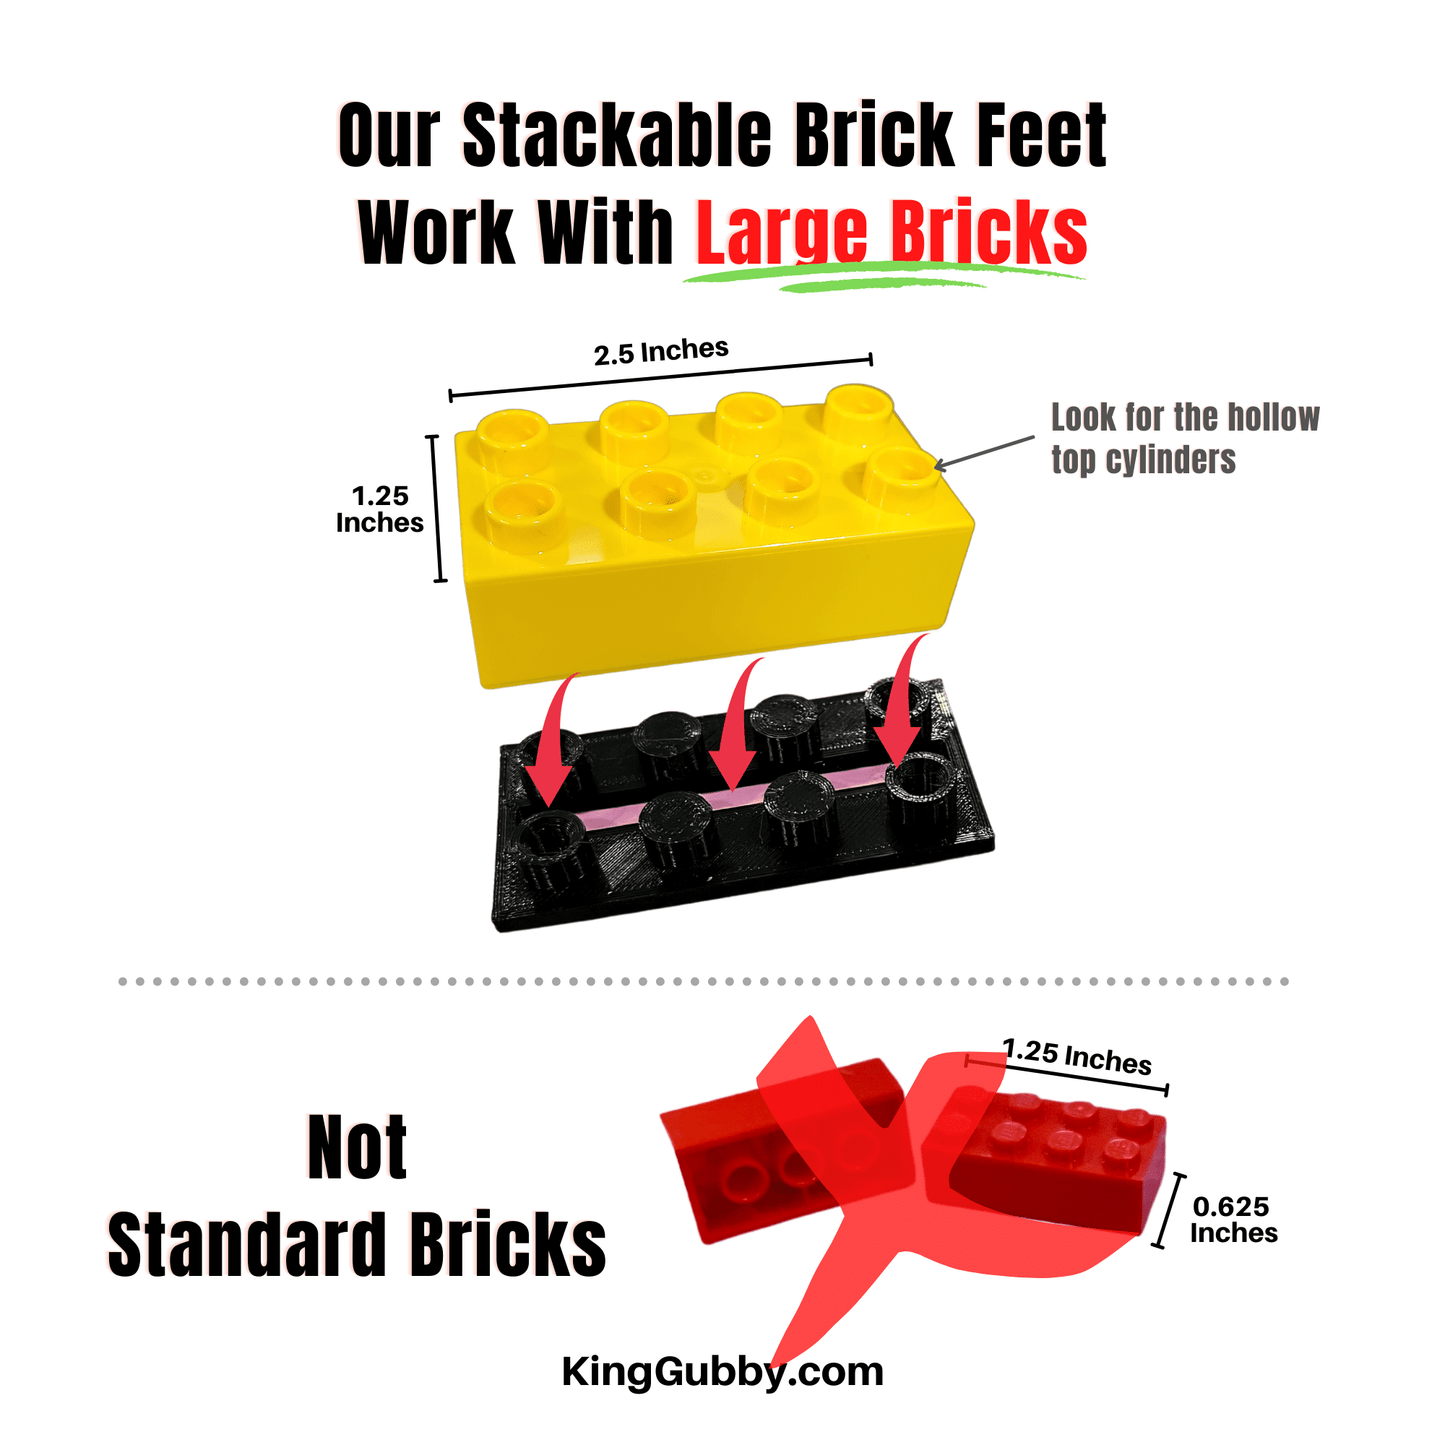 Height Adjusting Bricks For King Gubby Stackable Brick Feet | Height Adjustment Bricks Only